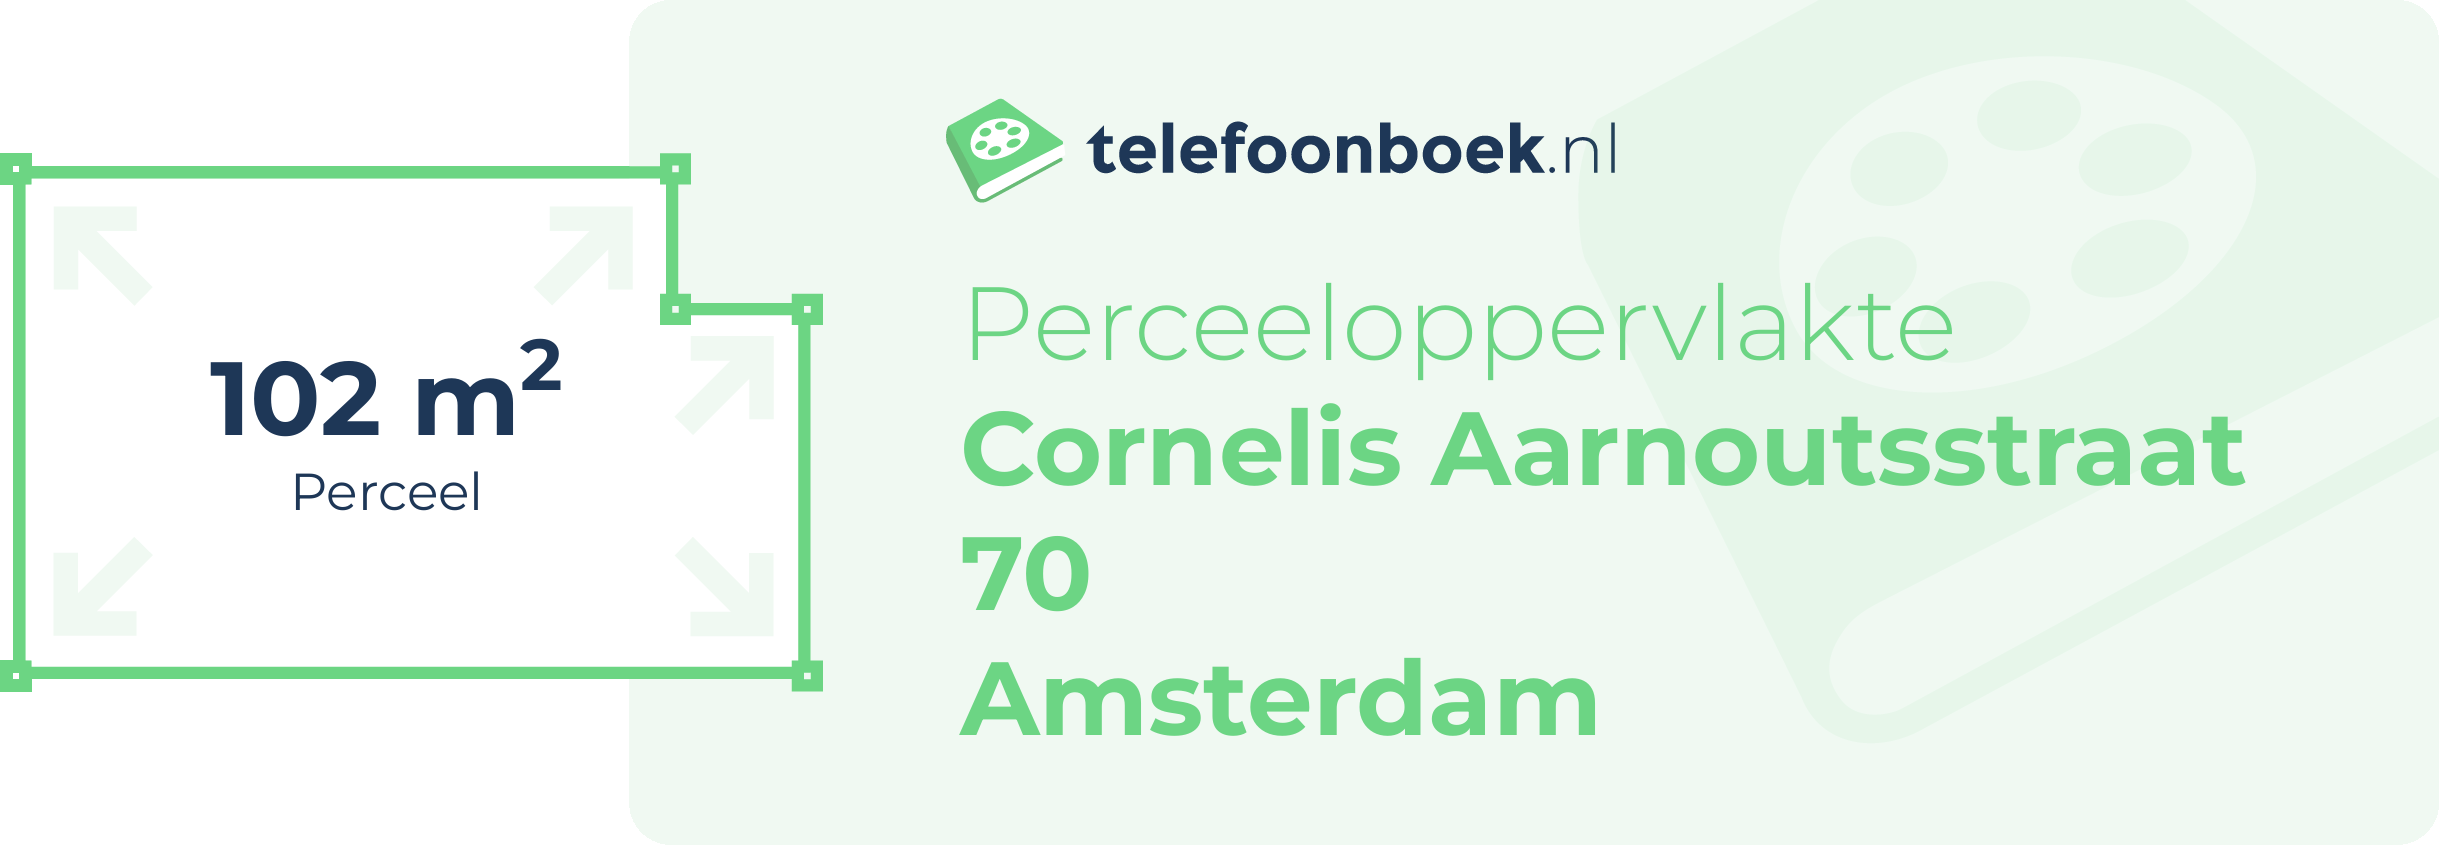 Perceeloppervlakte Cornelis Aarnoutsstraat 70 Amsterdam